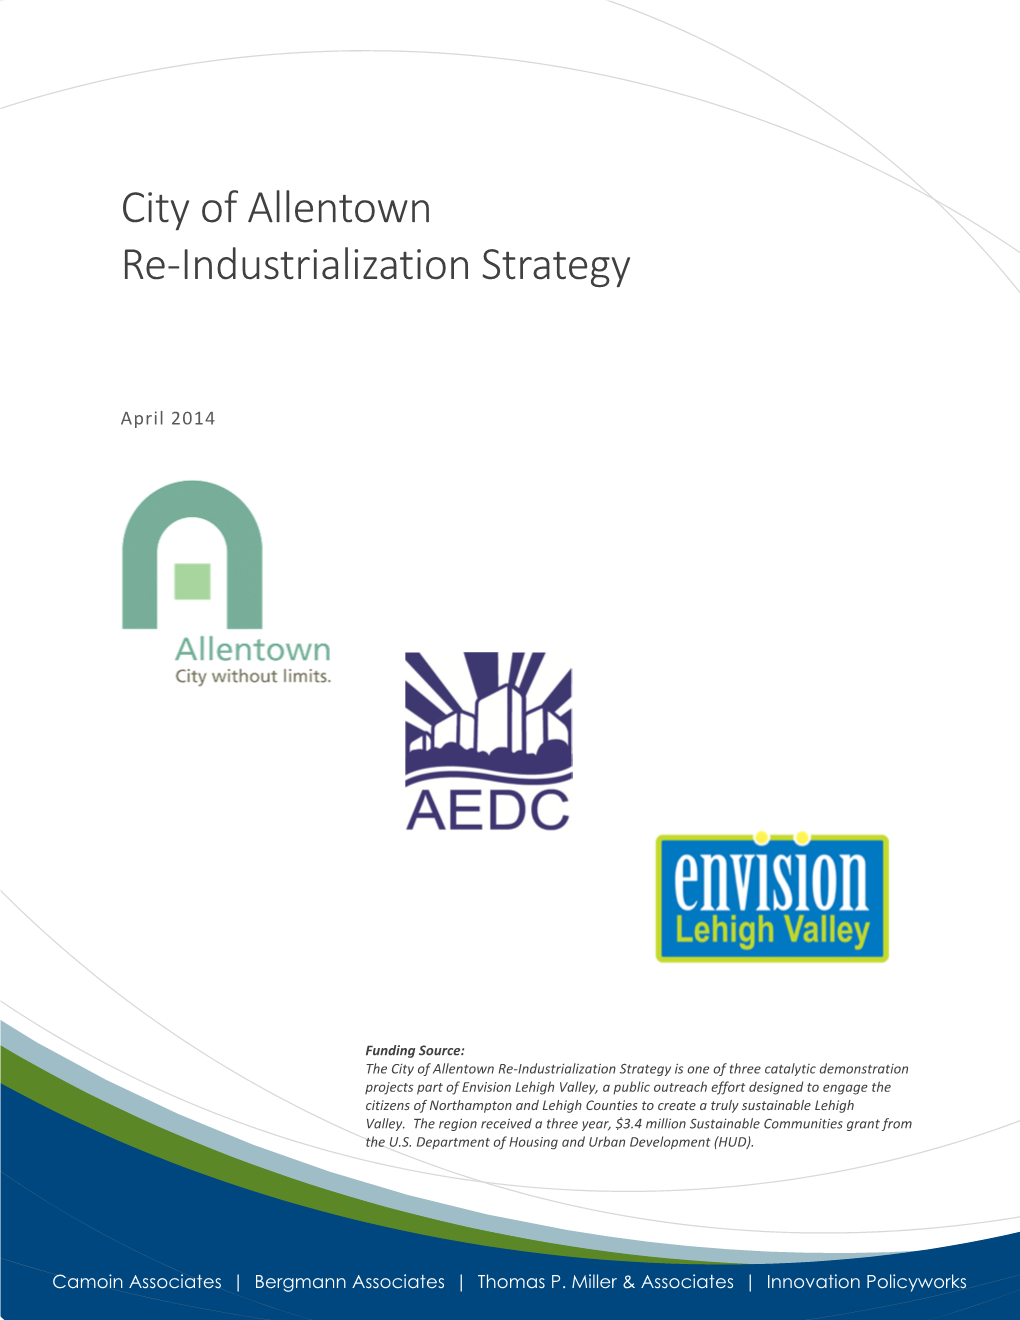 City of Allentown Re-Industrialization Strategy